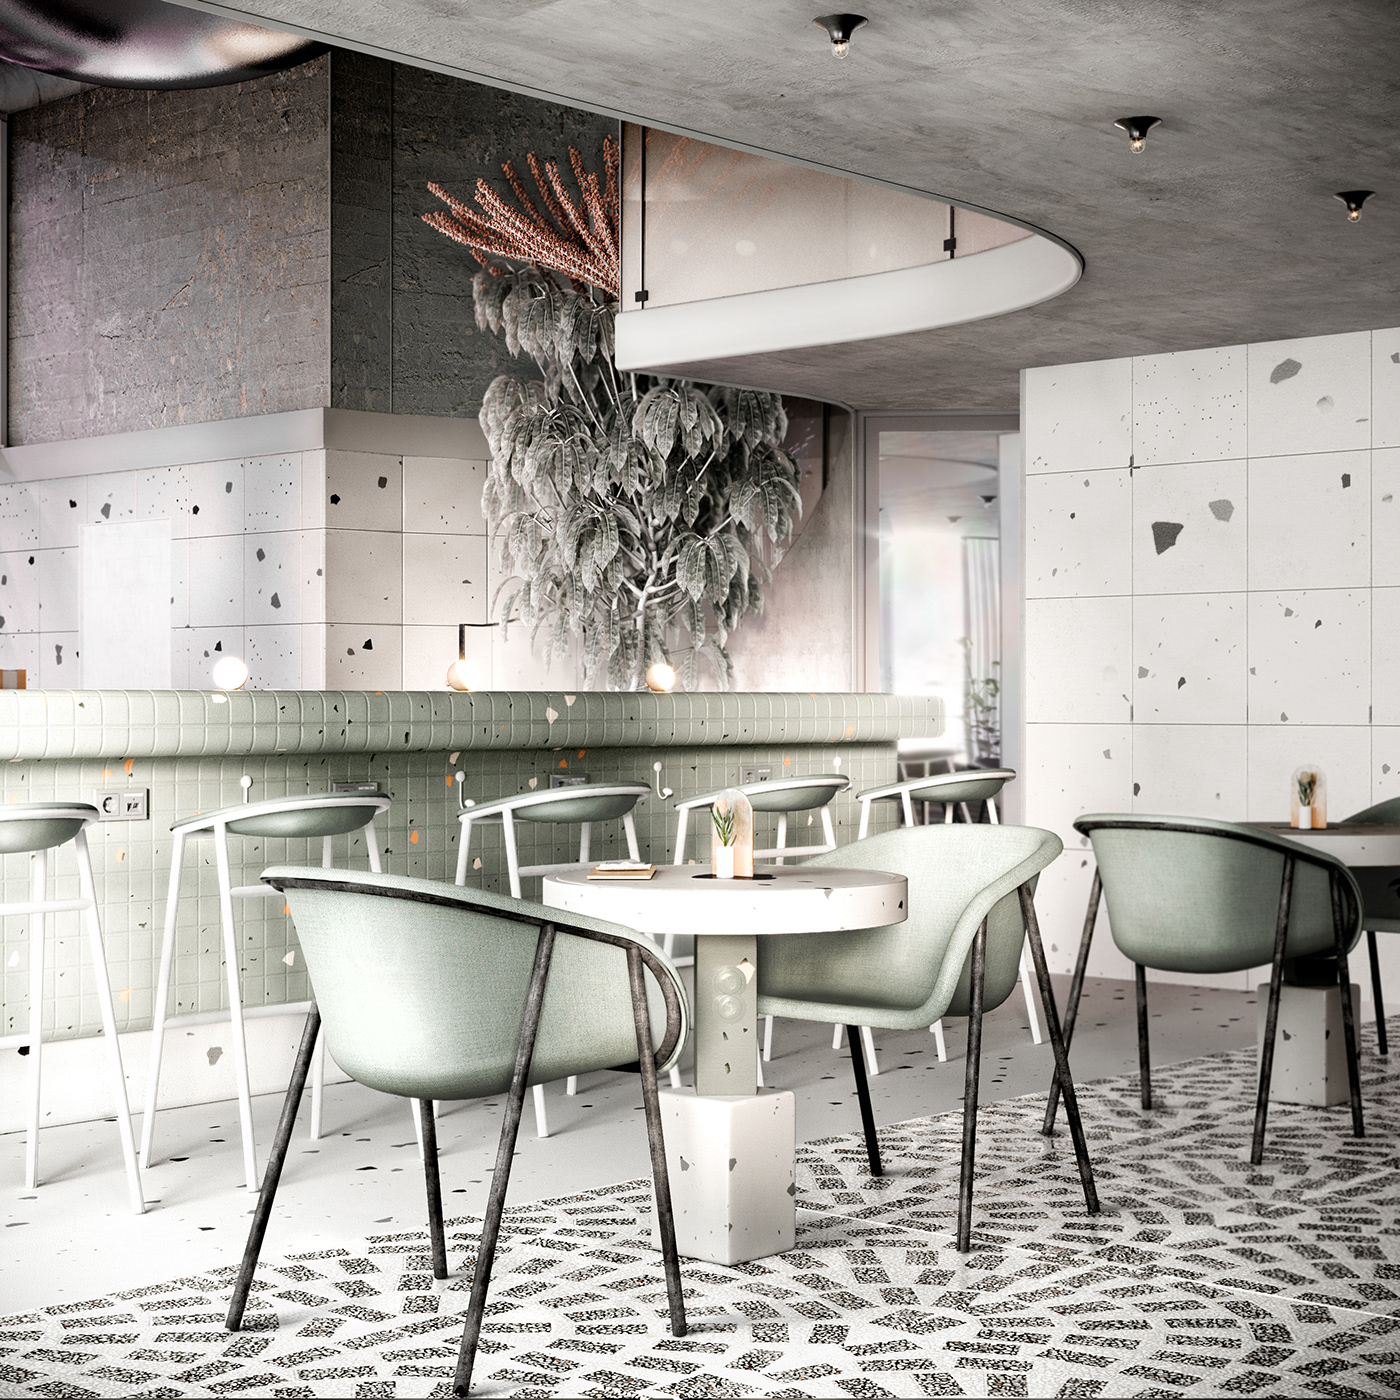 hydroponics restaurant cafe Interior interior design  recycle zero waste